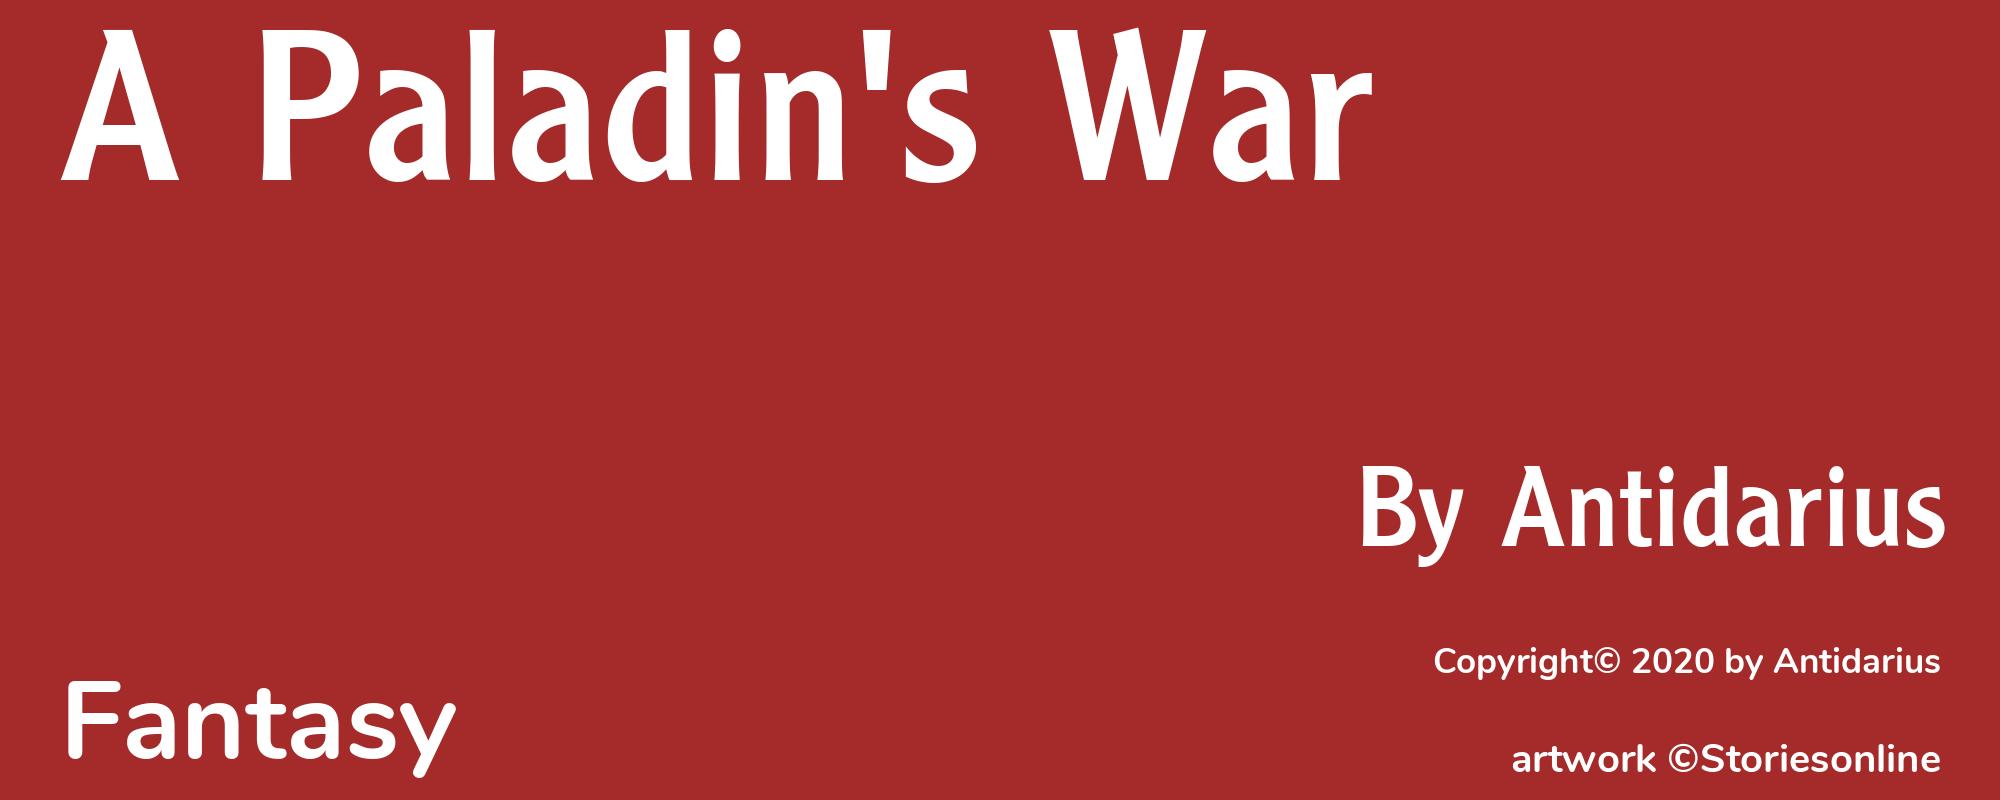 A Paladin's War - Cover